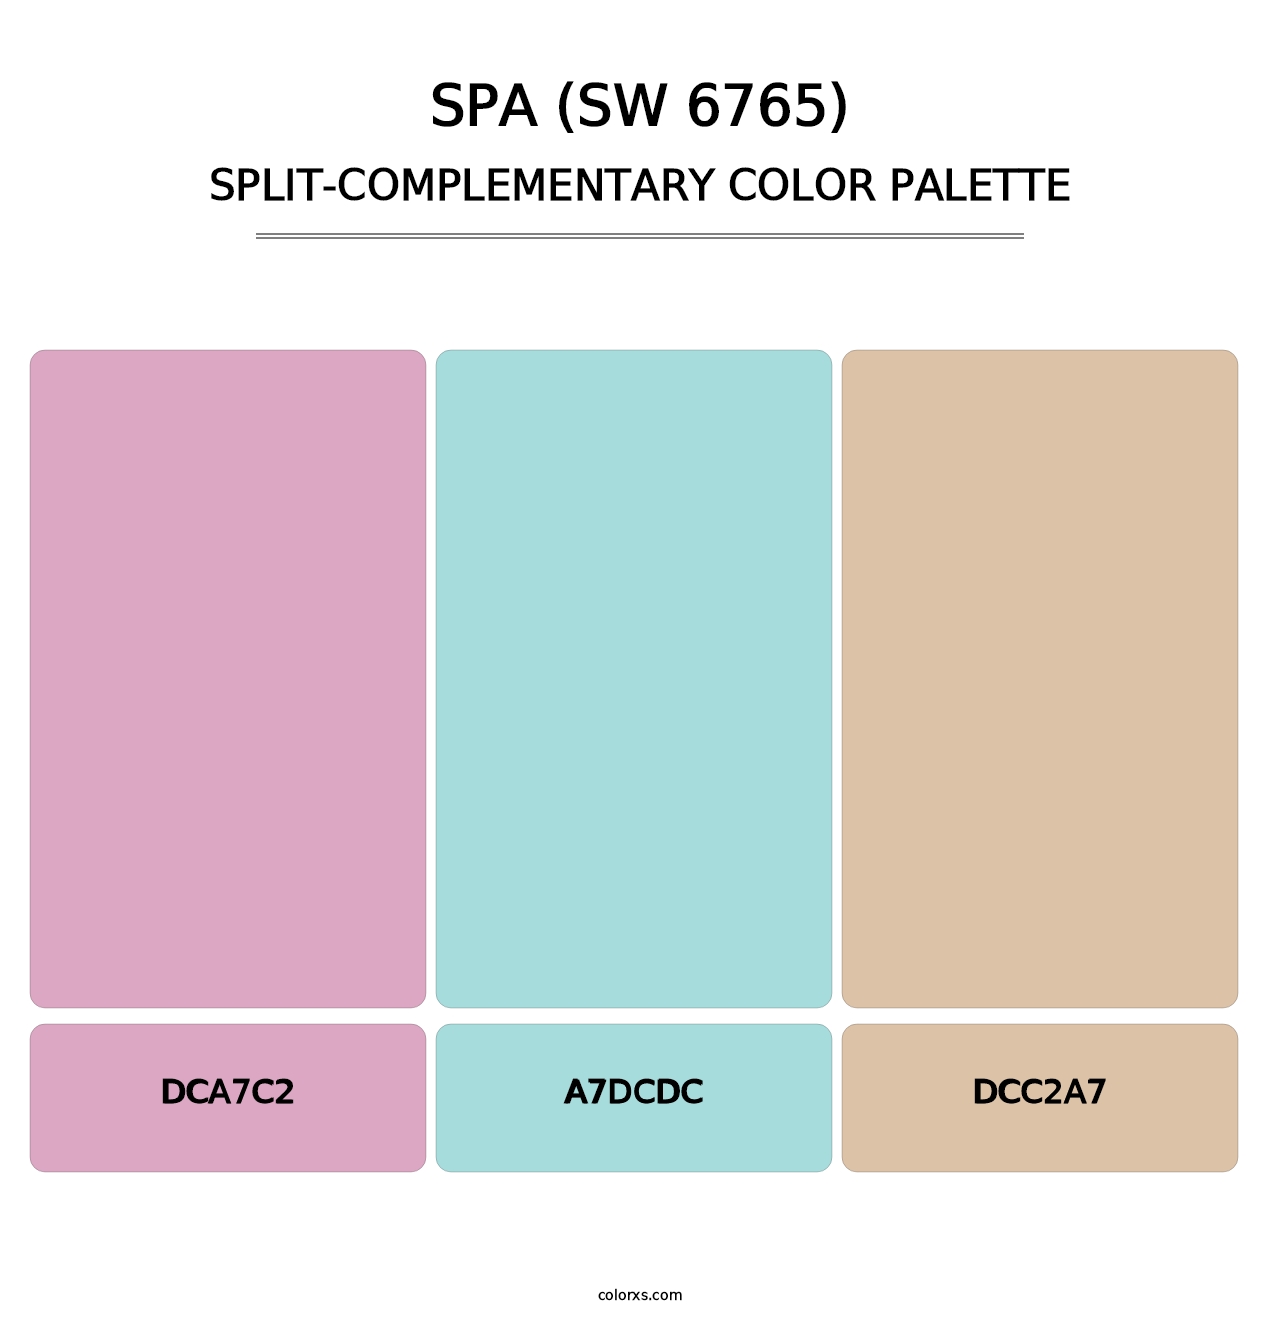 Spa (SW 6765) - Split-Complementary Color Palette